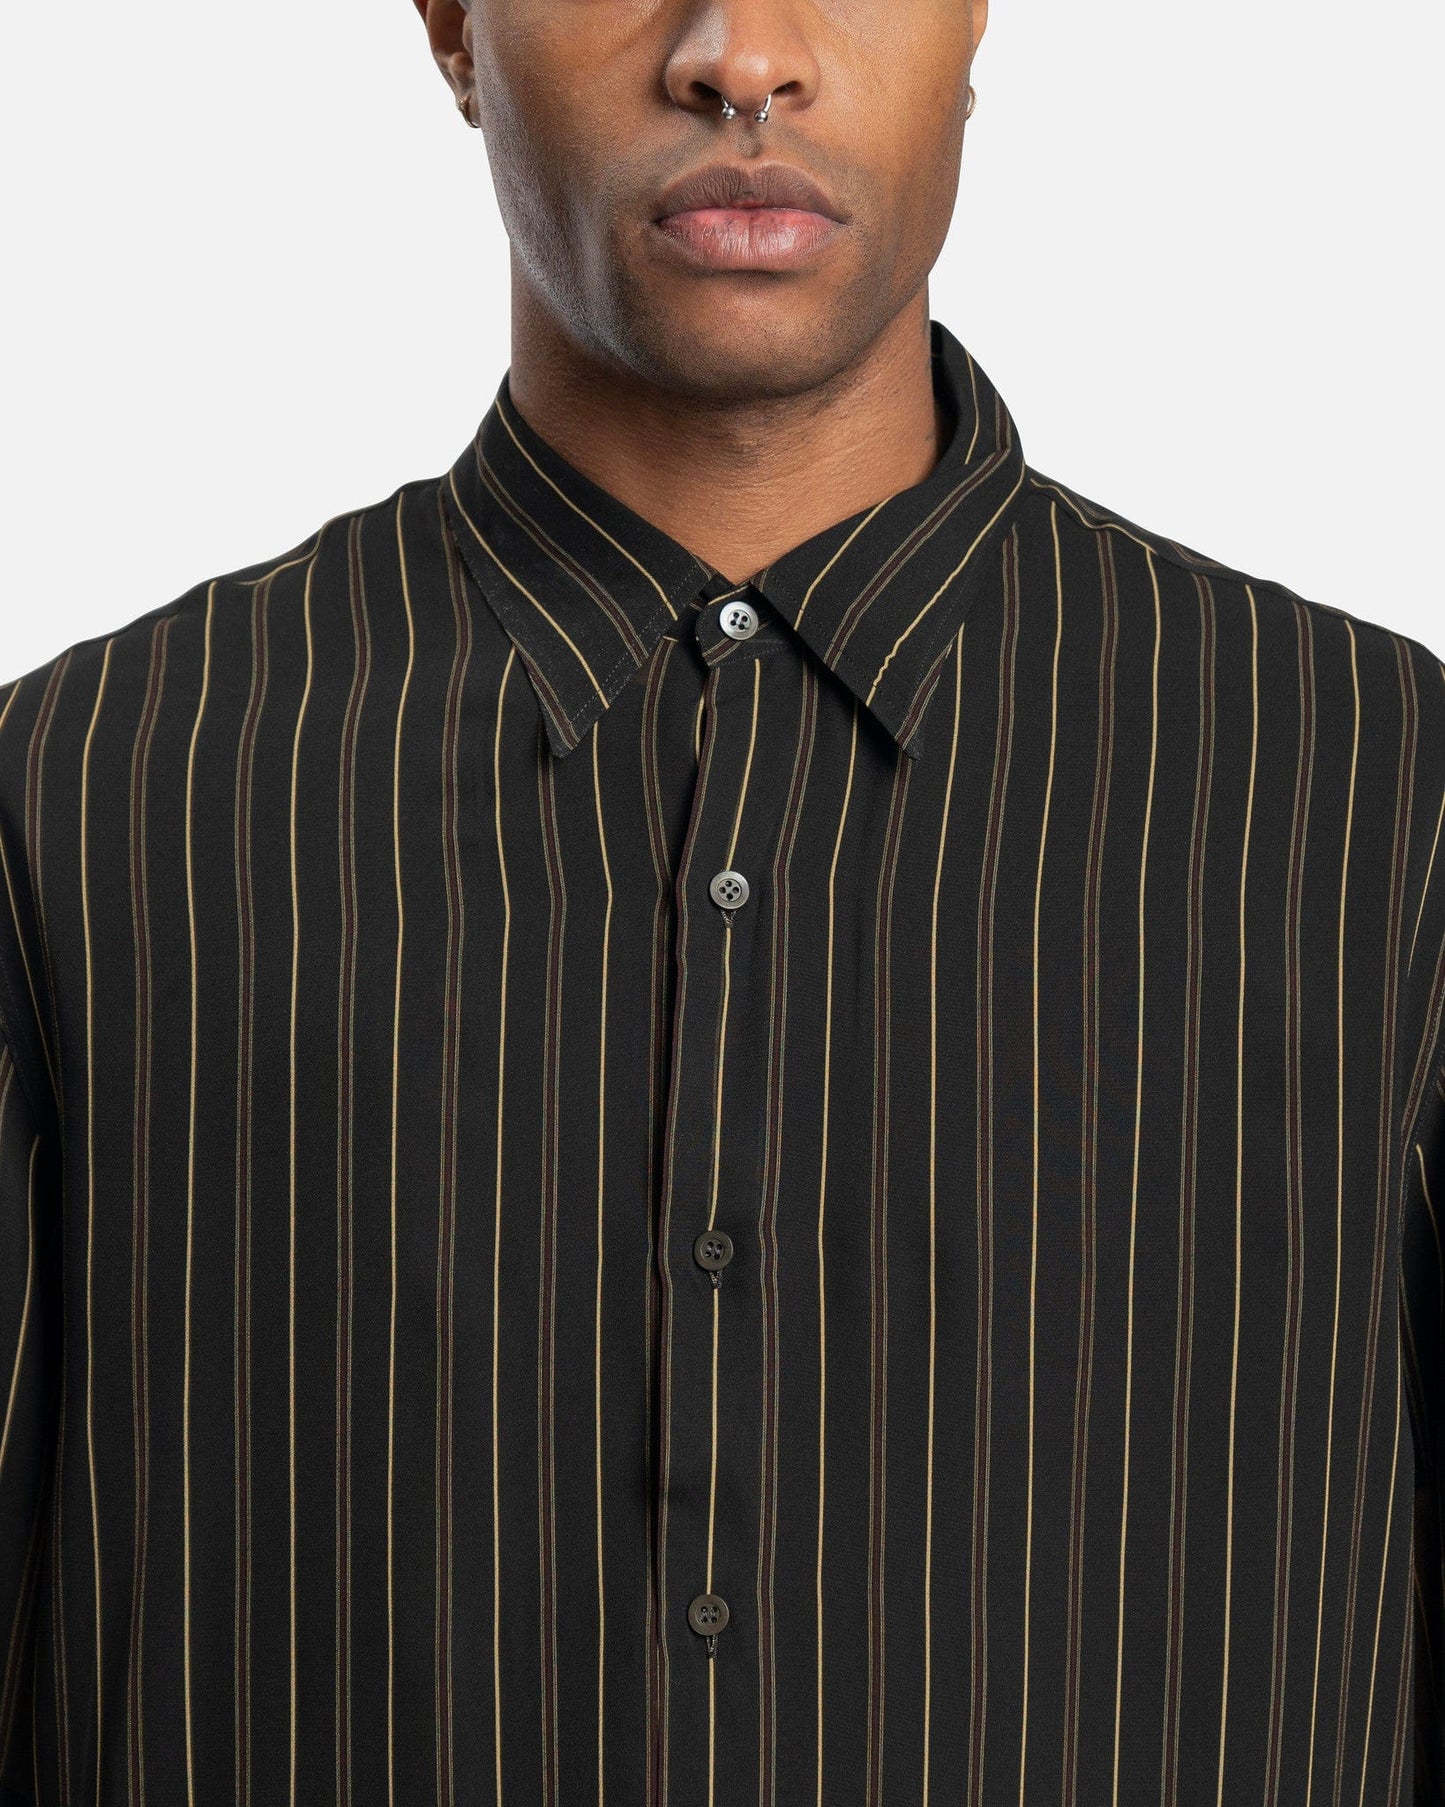 Dries Van Noten Men's Shirts Cassidye Shirt in Black